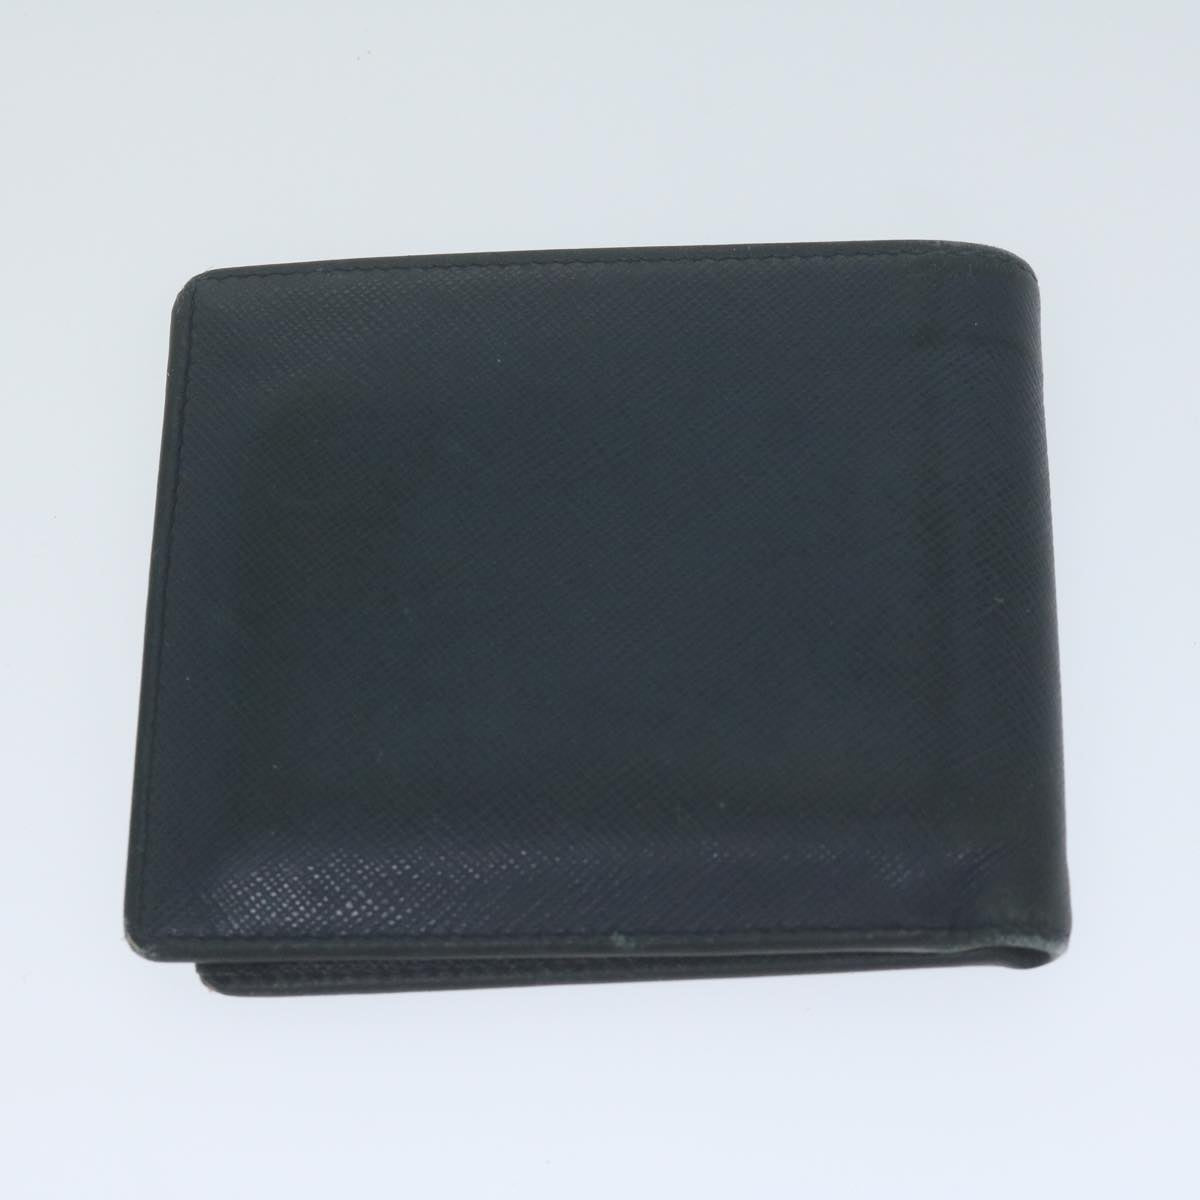 PRADA Wallet Leather nylon 9Set Black Blue Gold red Auth fm3192